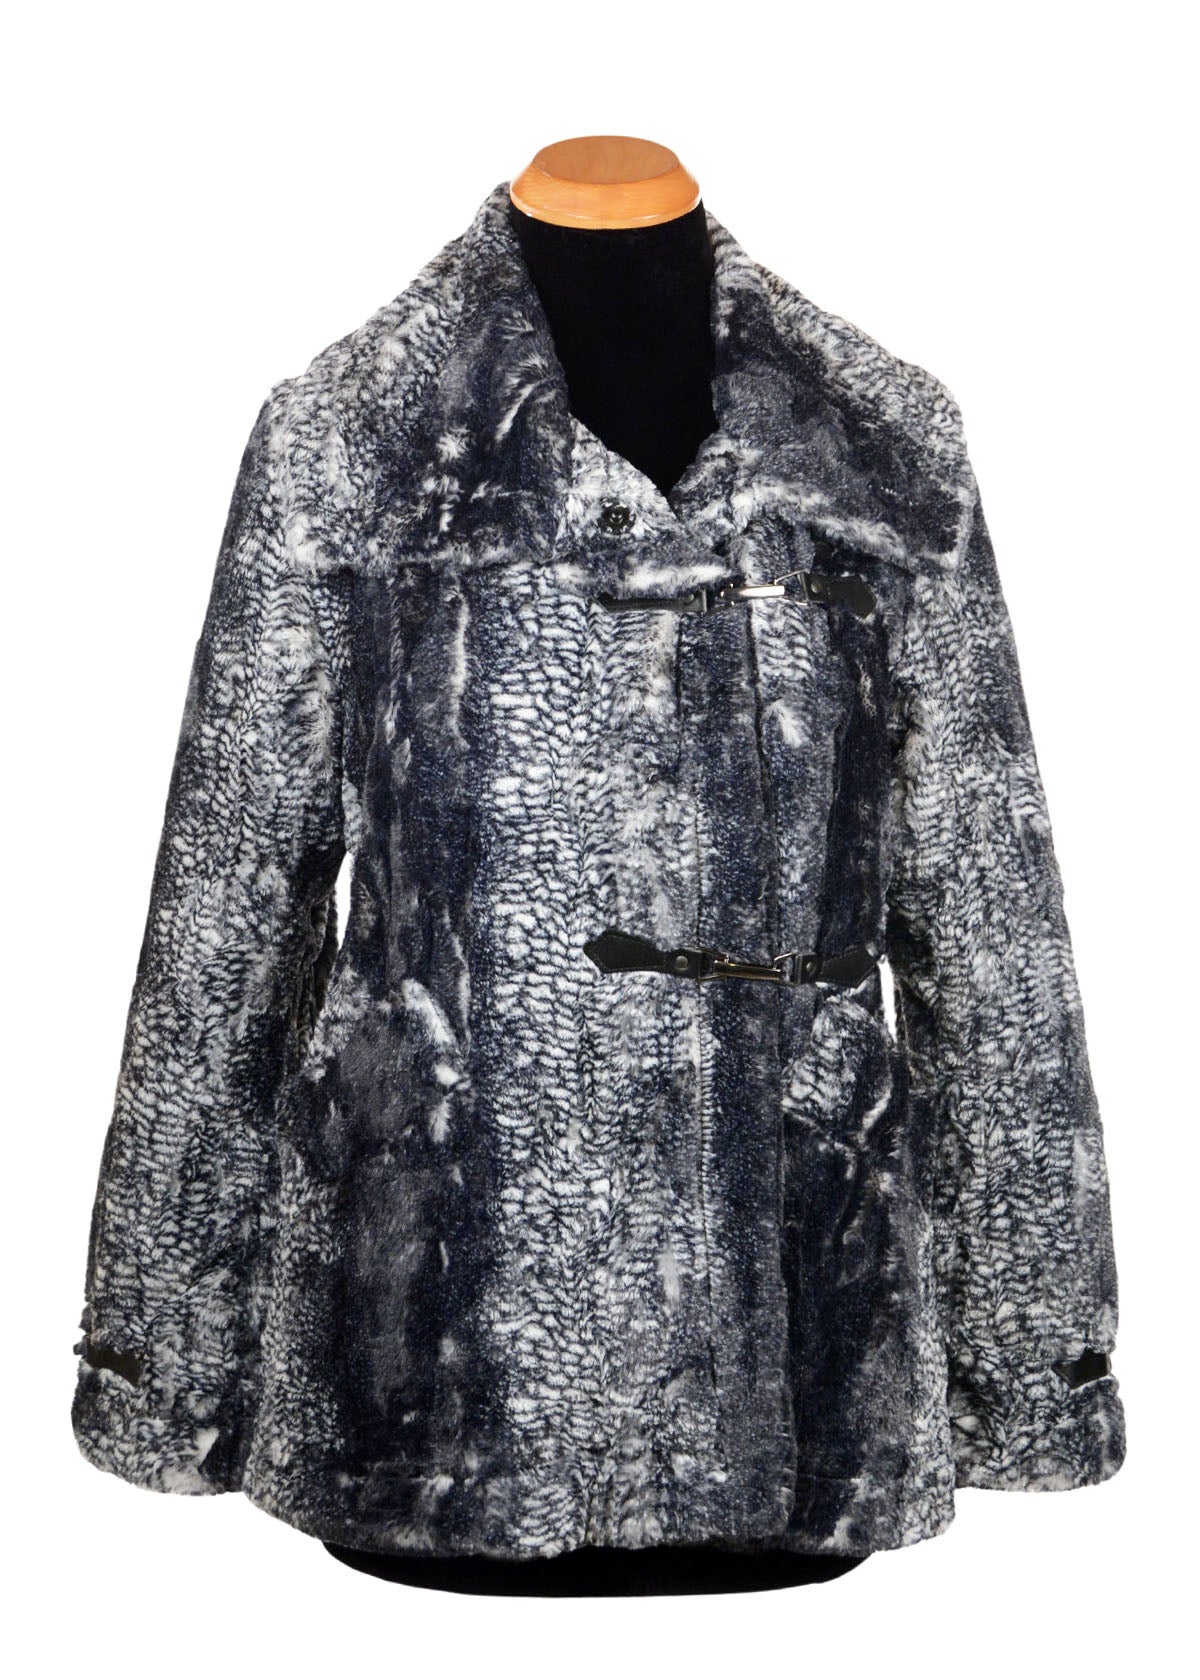 Dietrich Coat | Shown in Luxury Faux Fur in Black Mamba | Handmade by Pandemonium Seattle